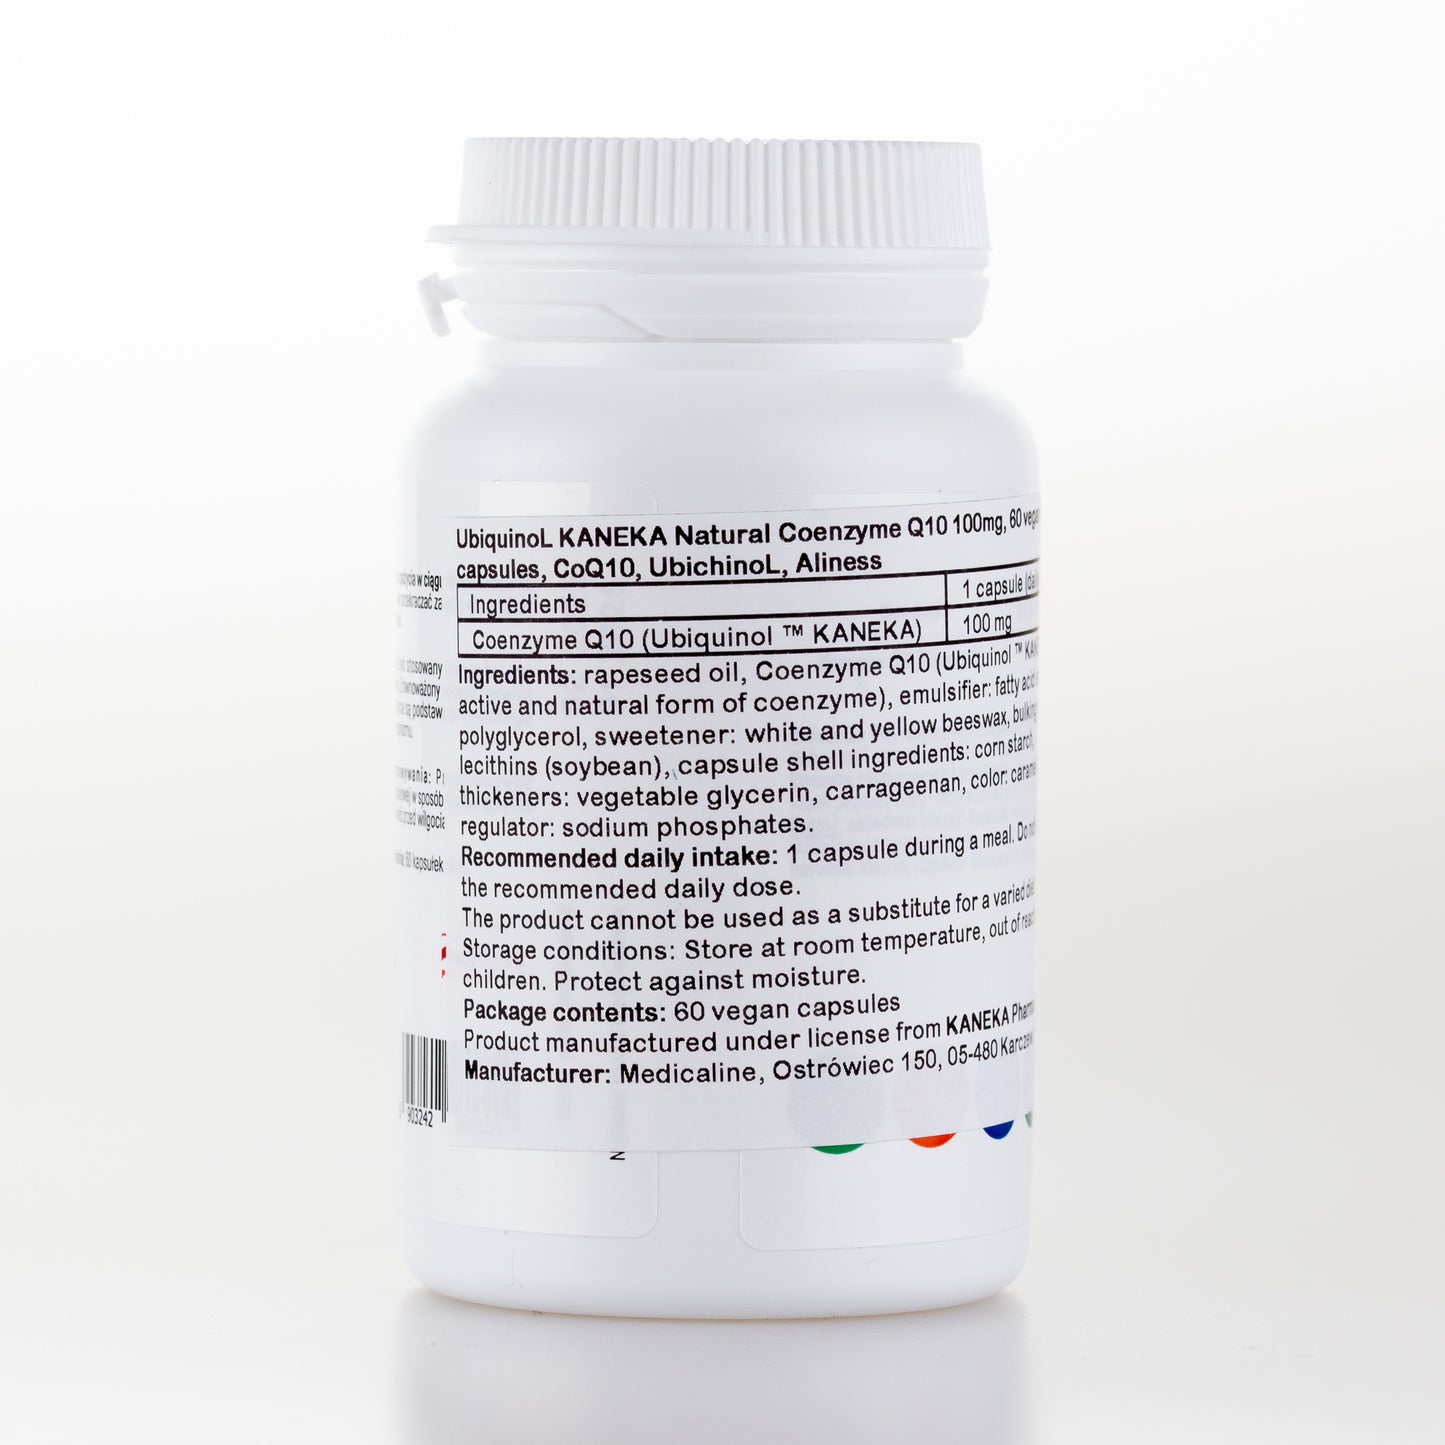 UbiquinoL KANEKA Natural Coenzyme Q10 100mg, 60 vegan capsules, CoQ10, UbichinoL